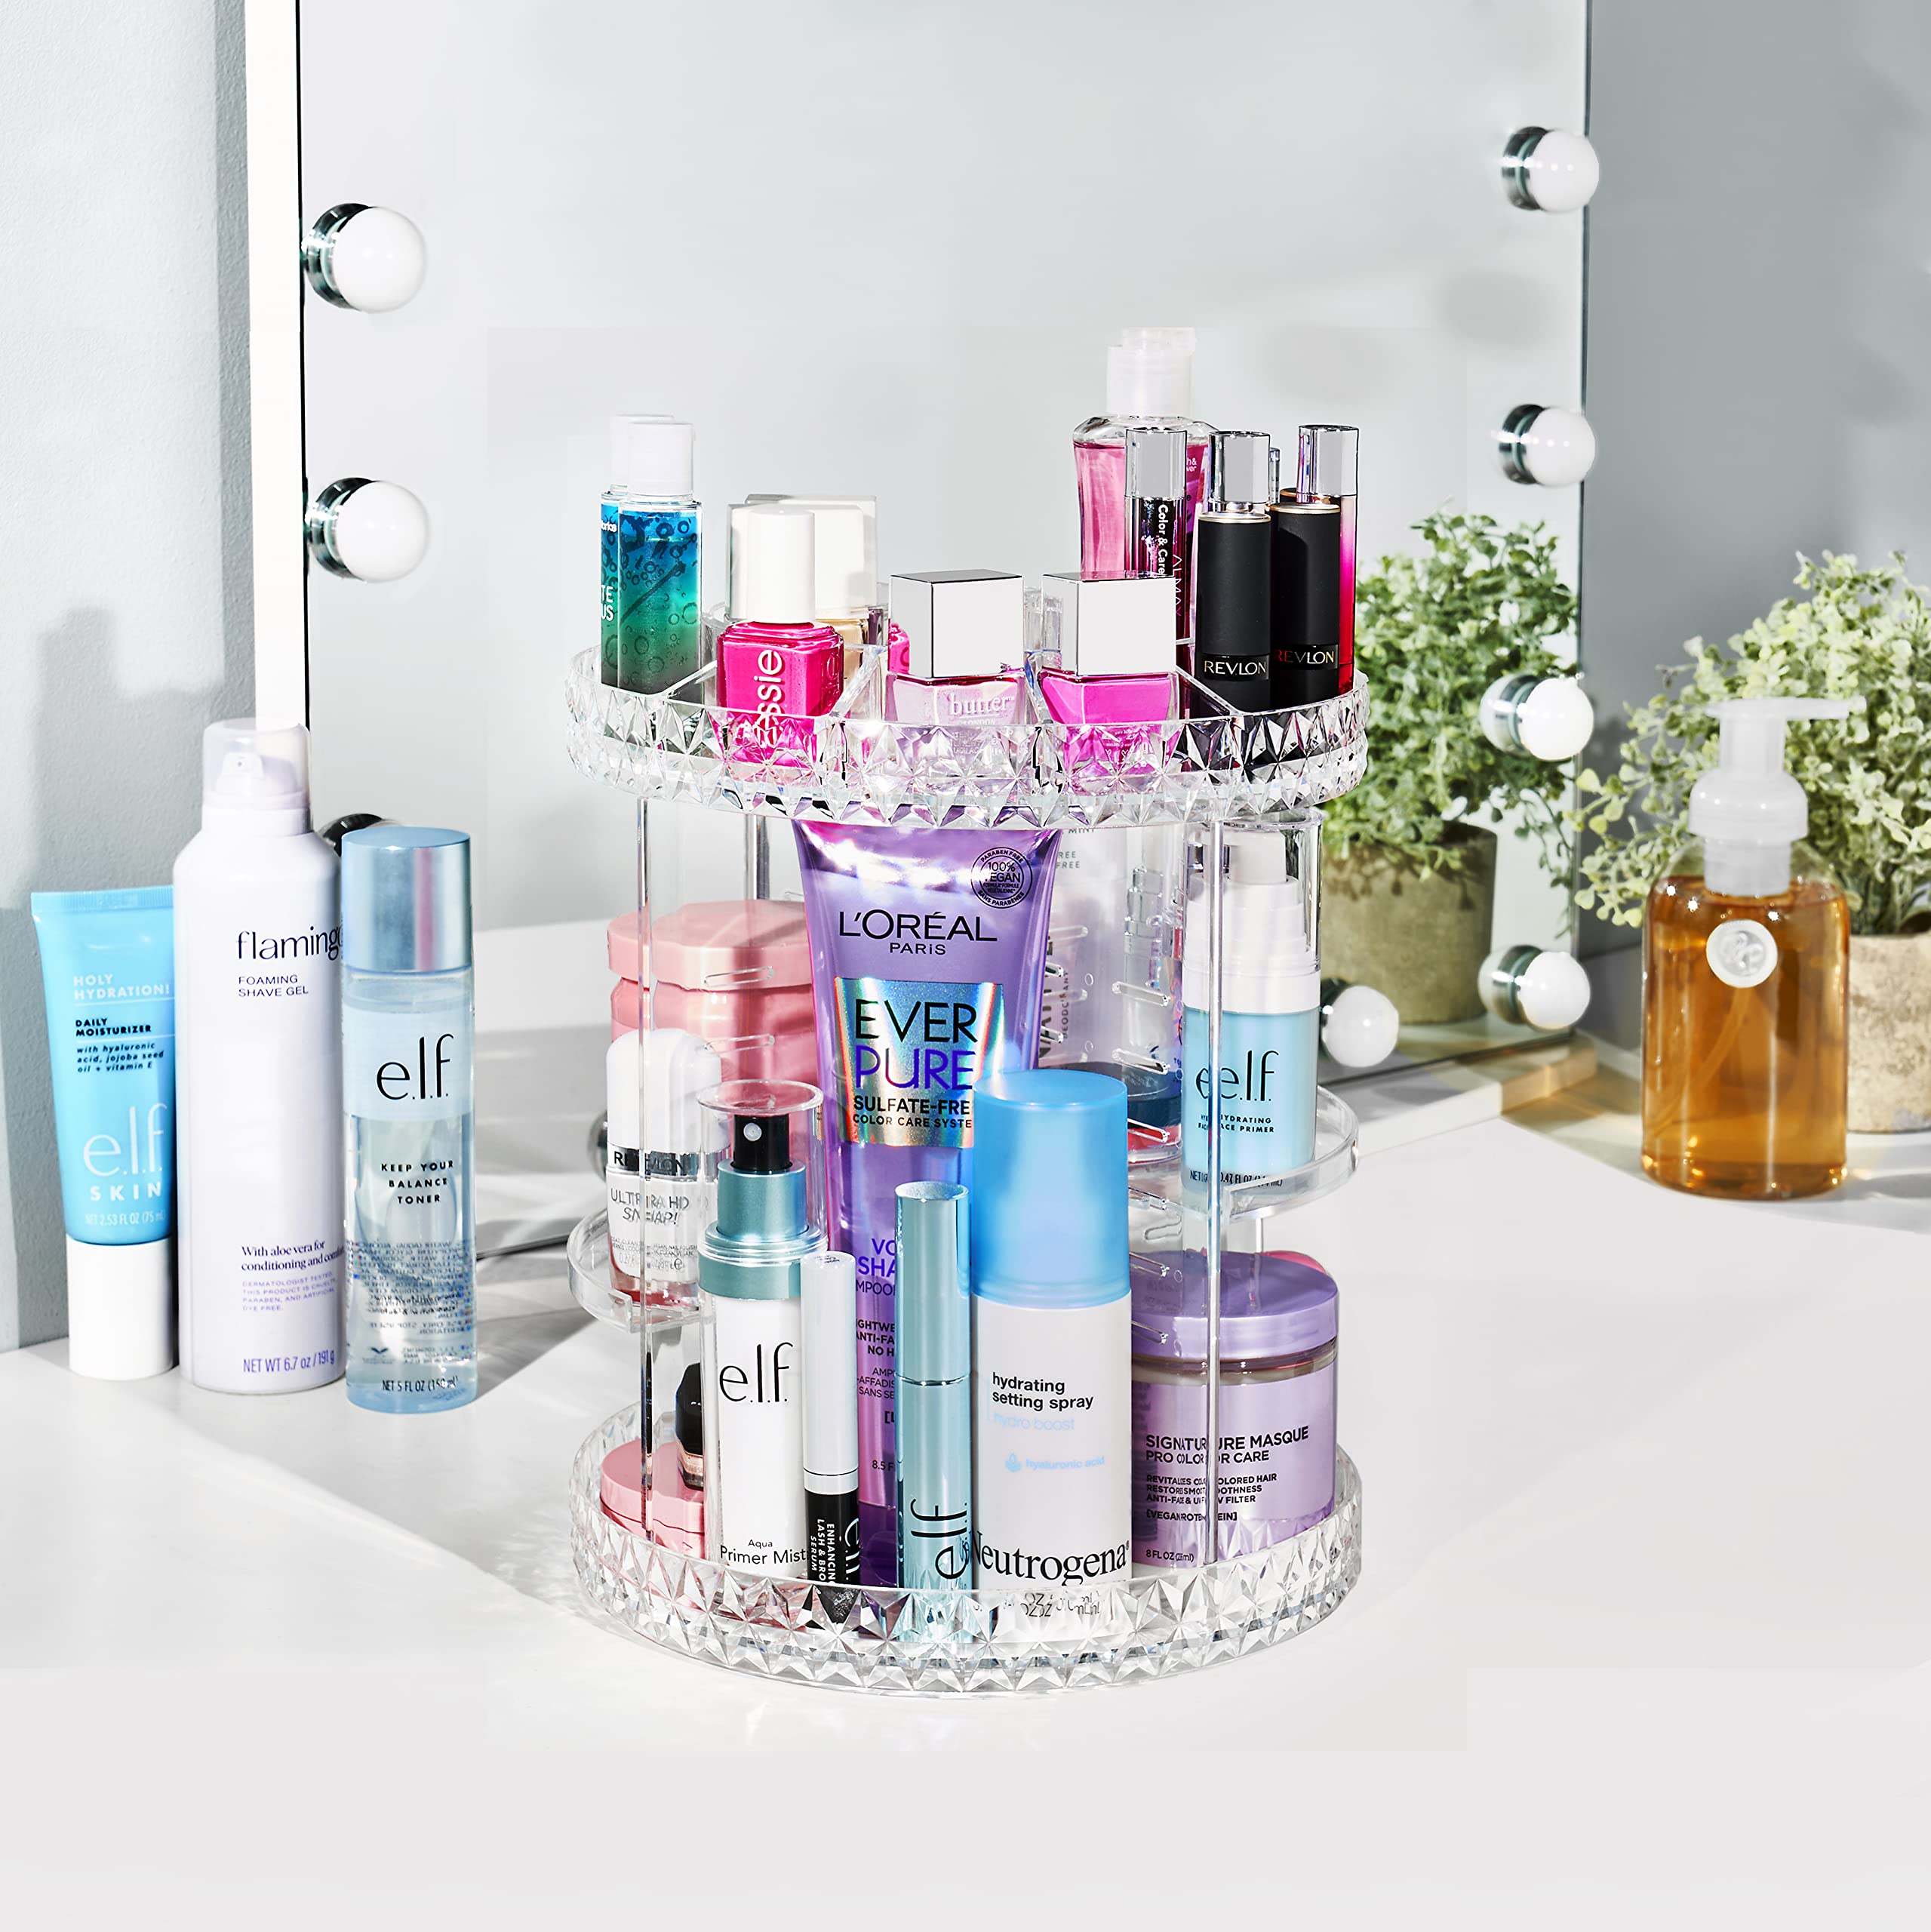 Sorbus 360 Rotating Makeup Organizer - Spinning cosmetics organizer, Adjustable Shelves for Make Up, Perfume & Toiletries - Acrylic Makeup Organizer for Vanity, Bathroom, Bedroom, Closet [Clear]